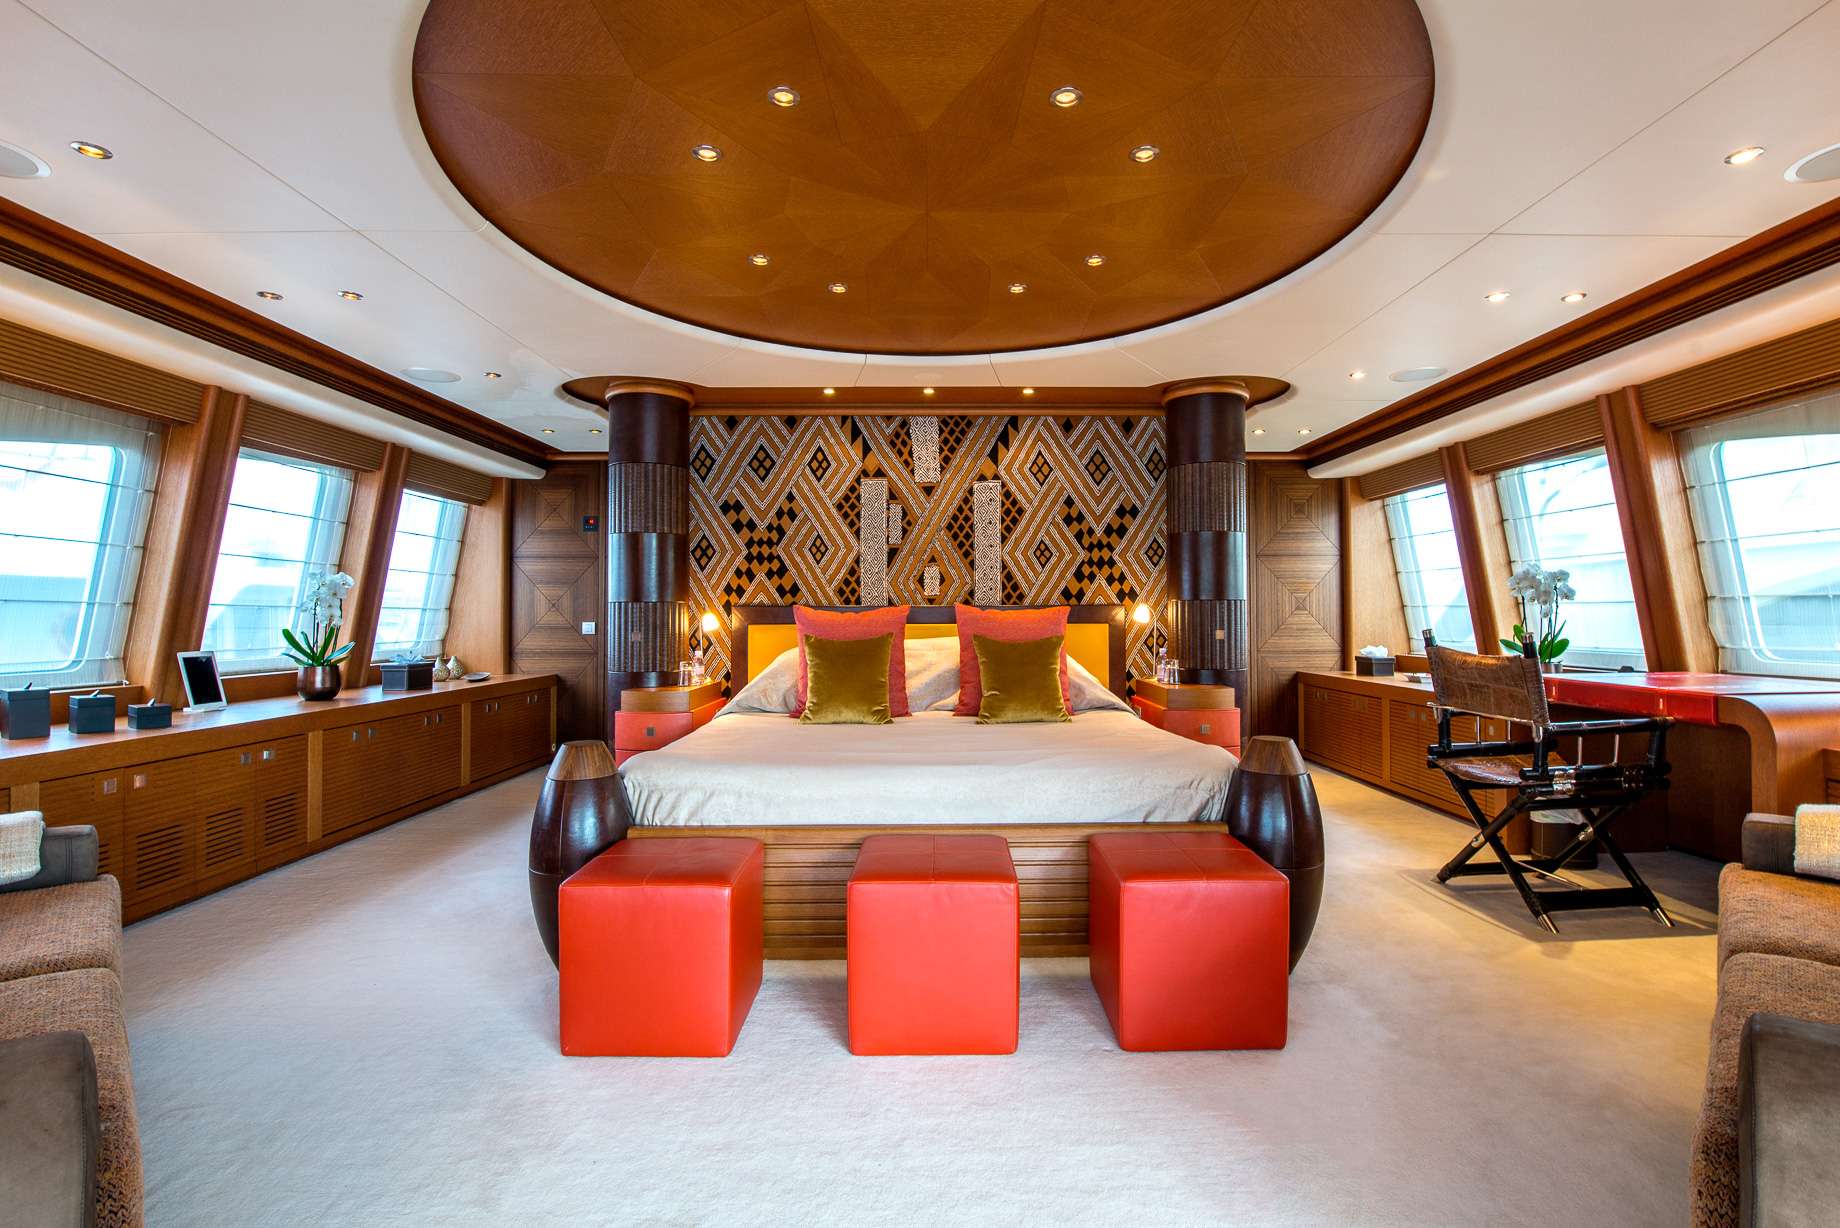 Motor Yacht 'SIROCCO' master cabin, 12 PAX, 154.00 Ft, 47.00 Meters, Built 2006, Heesen, Refit Year 2015